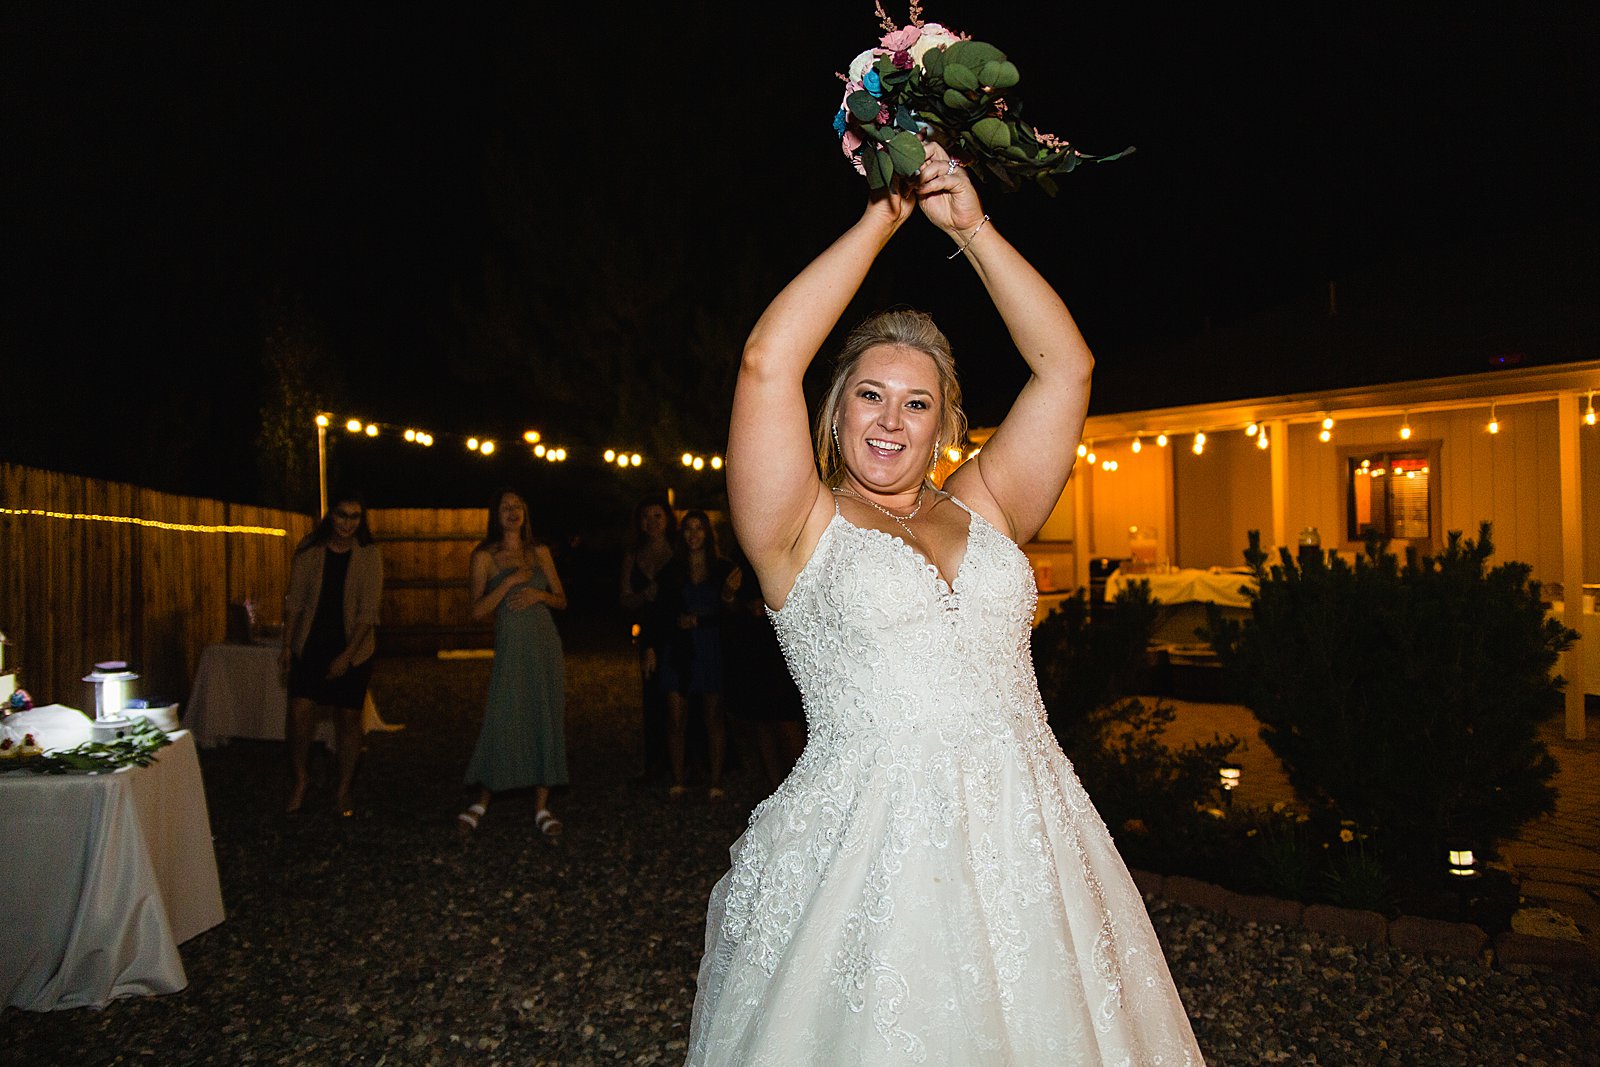 Bouquet toss at backyard wedding reception by Flagstaff wedding photographer PMA Photography.